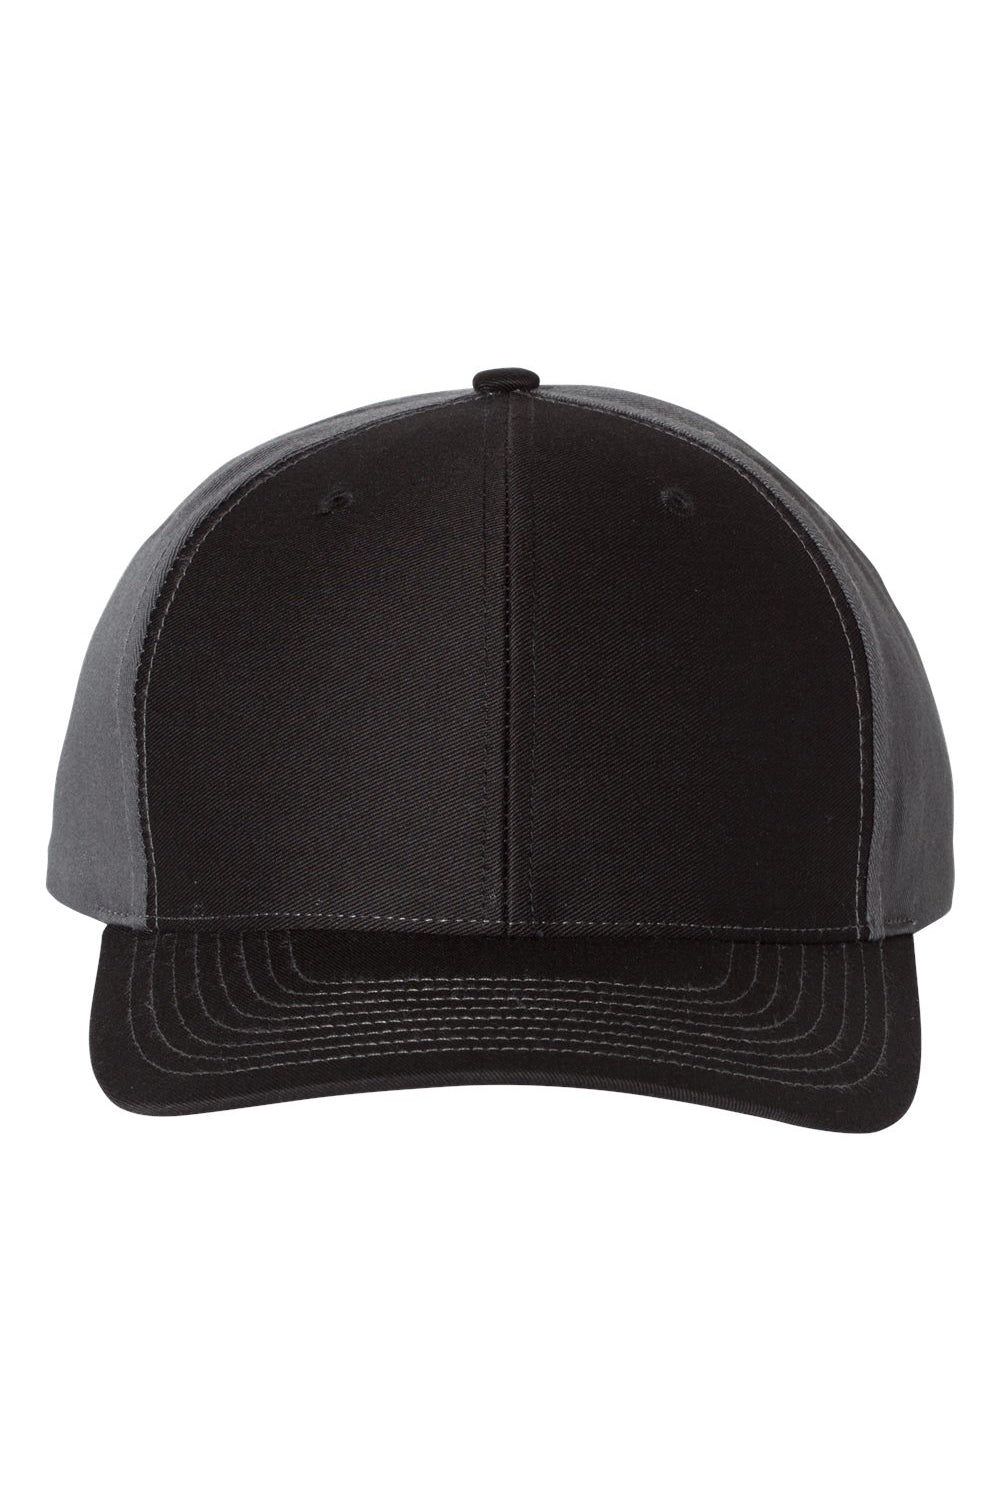 Richardson 312 Mens Twill Back Trucker Hat Black/Charcoal Grey Flat Front